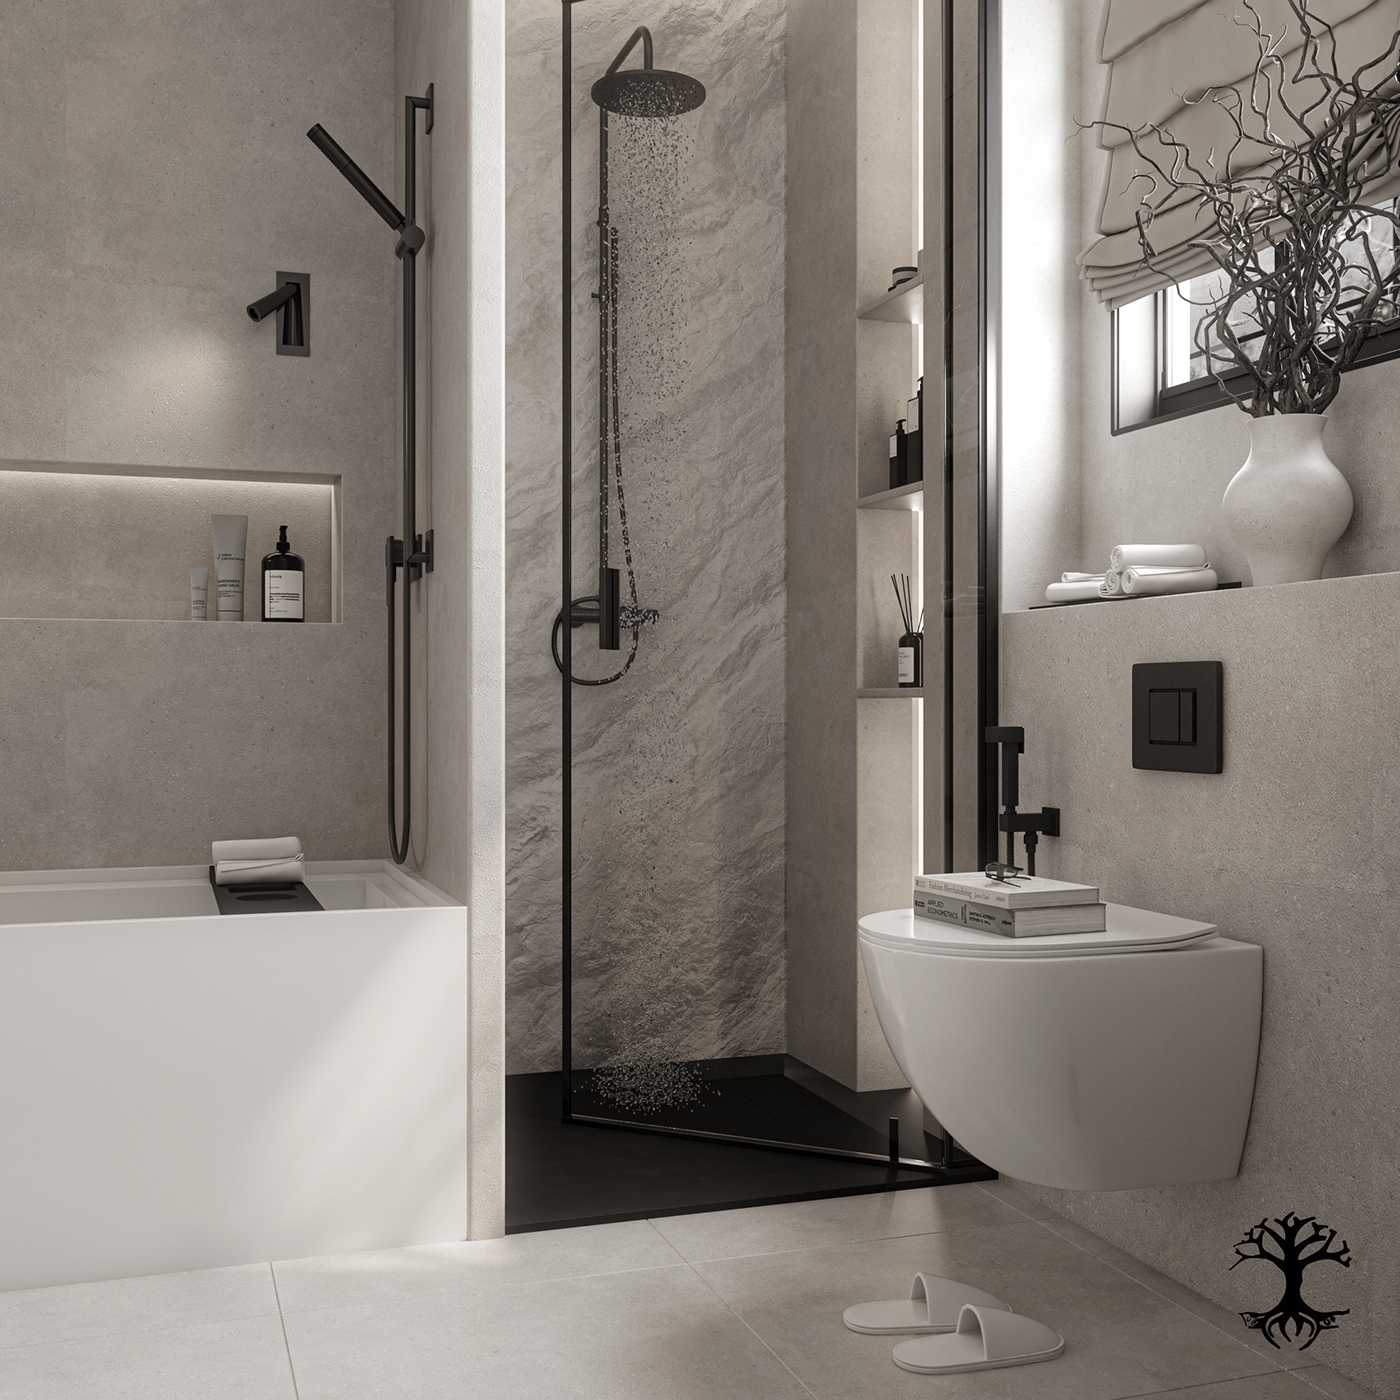 earthy bathroom interior design  architecture Render visualization 3D modern 3ds max vray